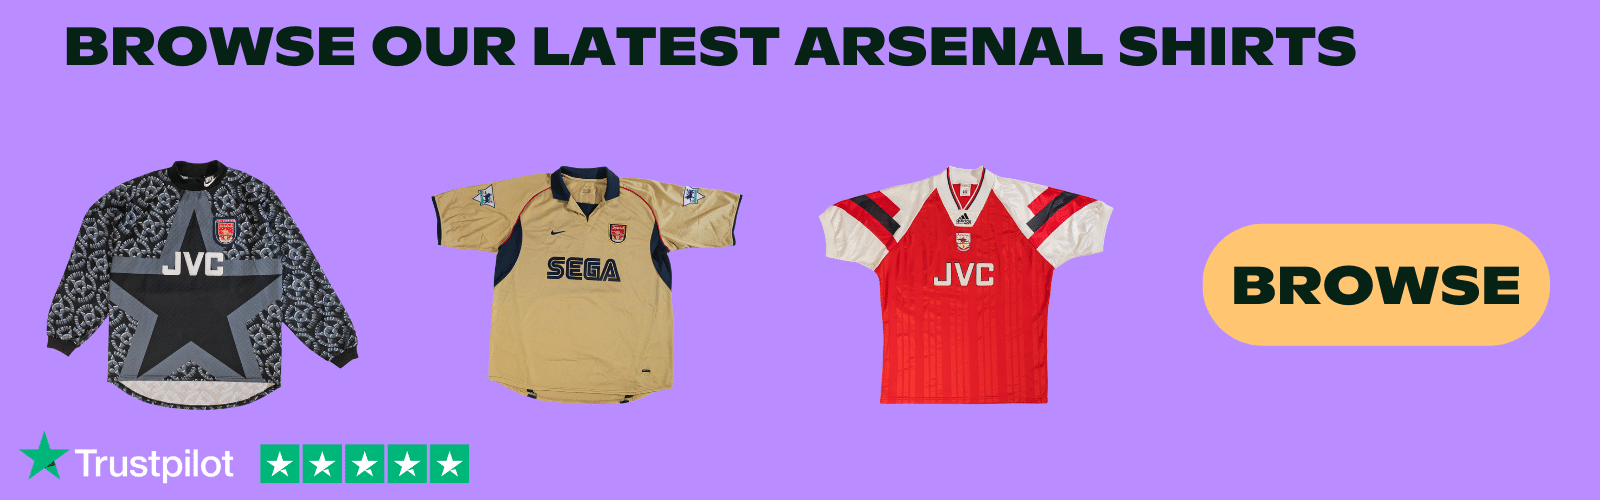 Arsenal X Adidas Retro Track Top - Football Shirt Culture - Latest Football  Kit News and More